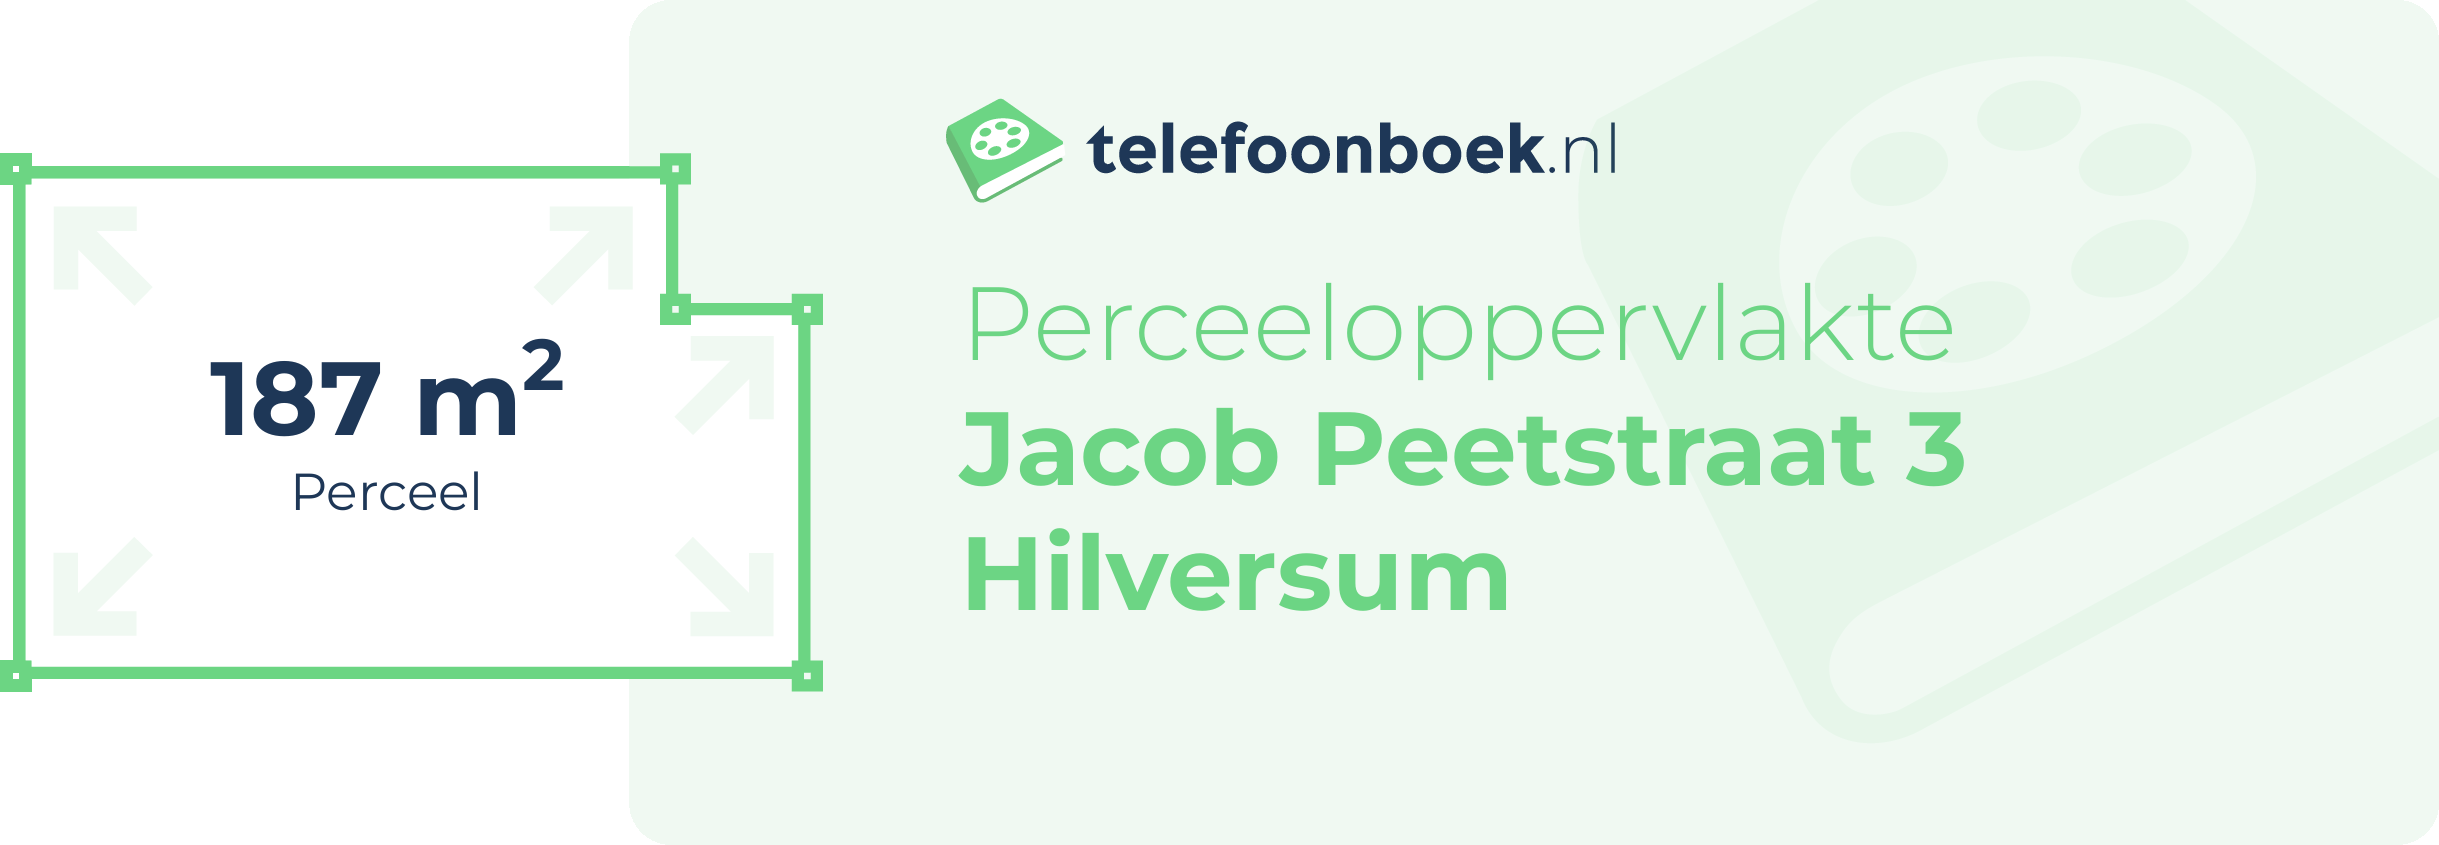 Perceeloppervlakte Jacob Peetstraat 3 Hilversum